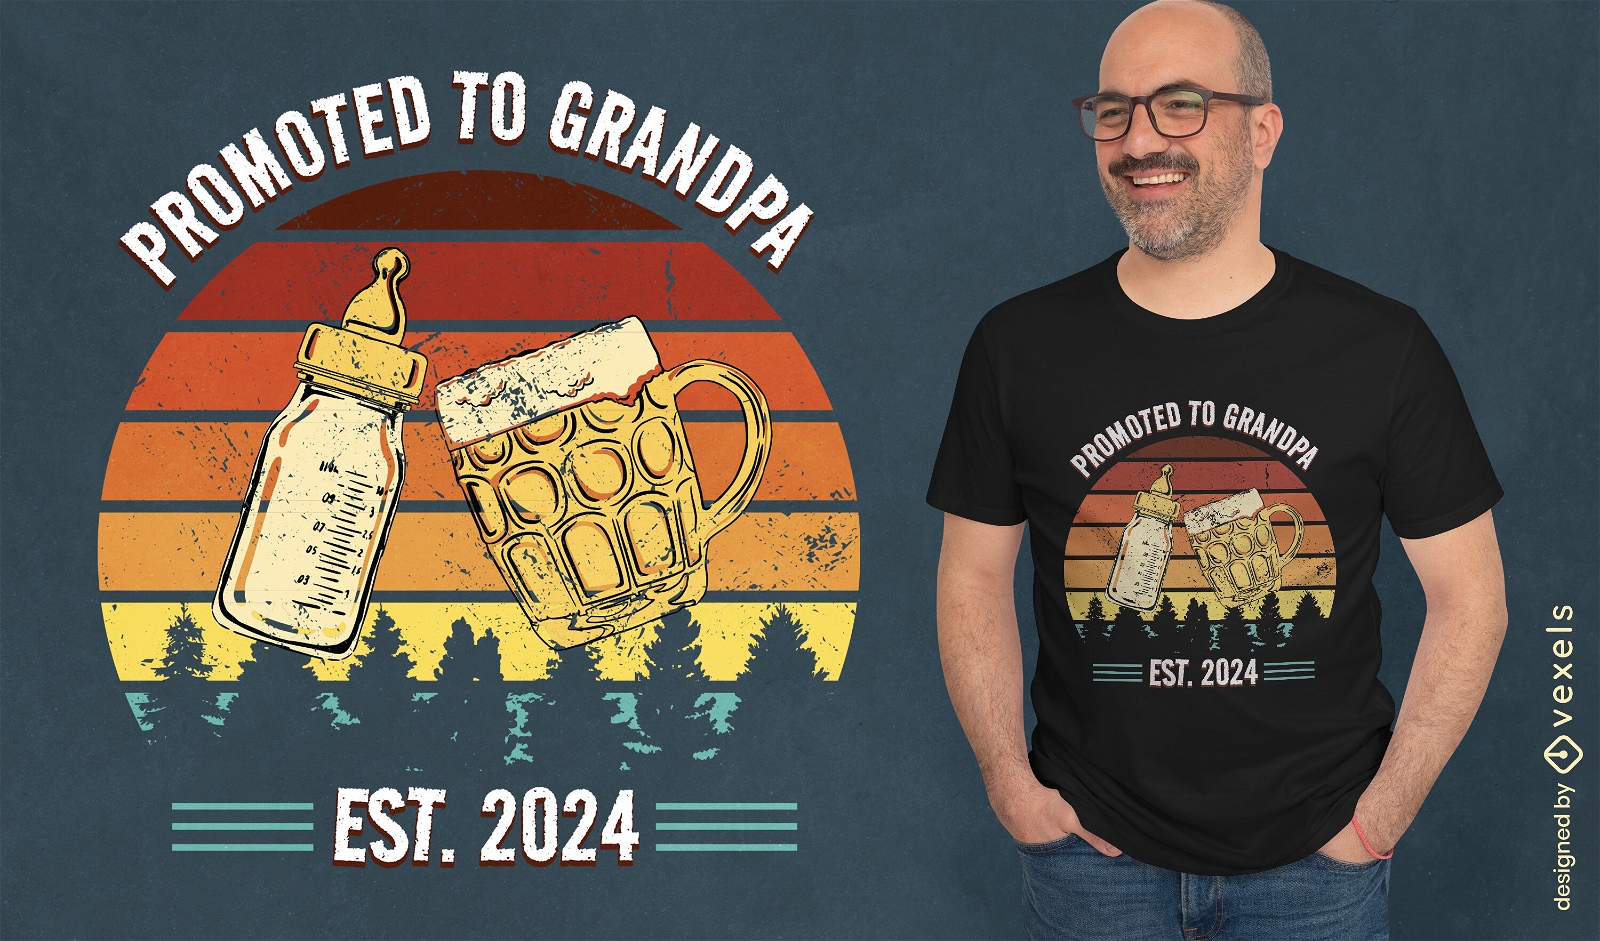 Neues T-Shirt-Design zur Feier des Großvaters